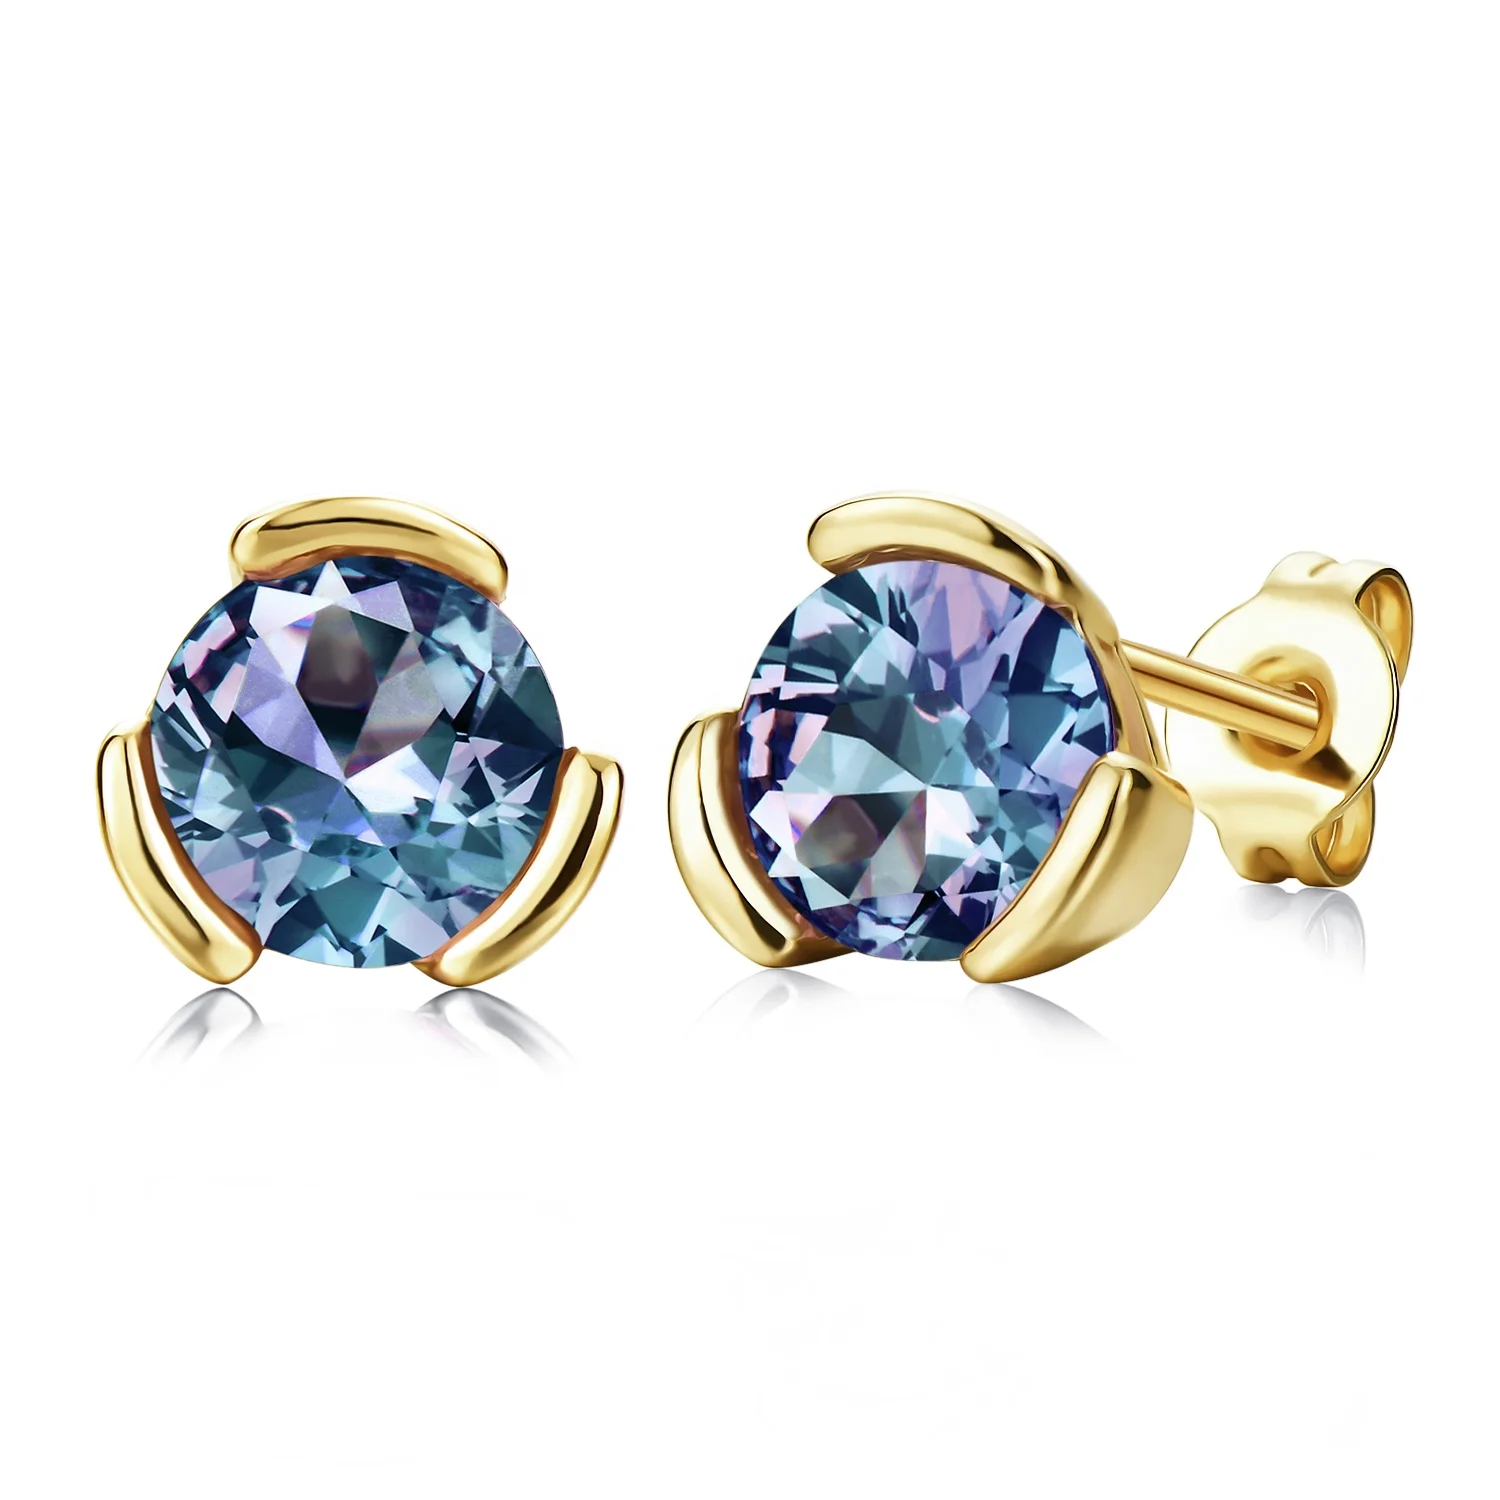 

Silver 925 Gold Plated Alexandrite Gemstone Nickel And Lead Free Stud Earrings Destiny Jewellery 2021 New Fashion Women Jewelry